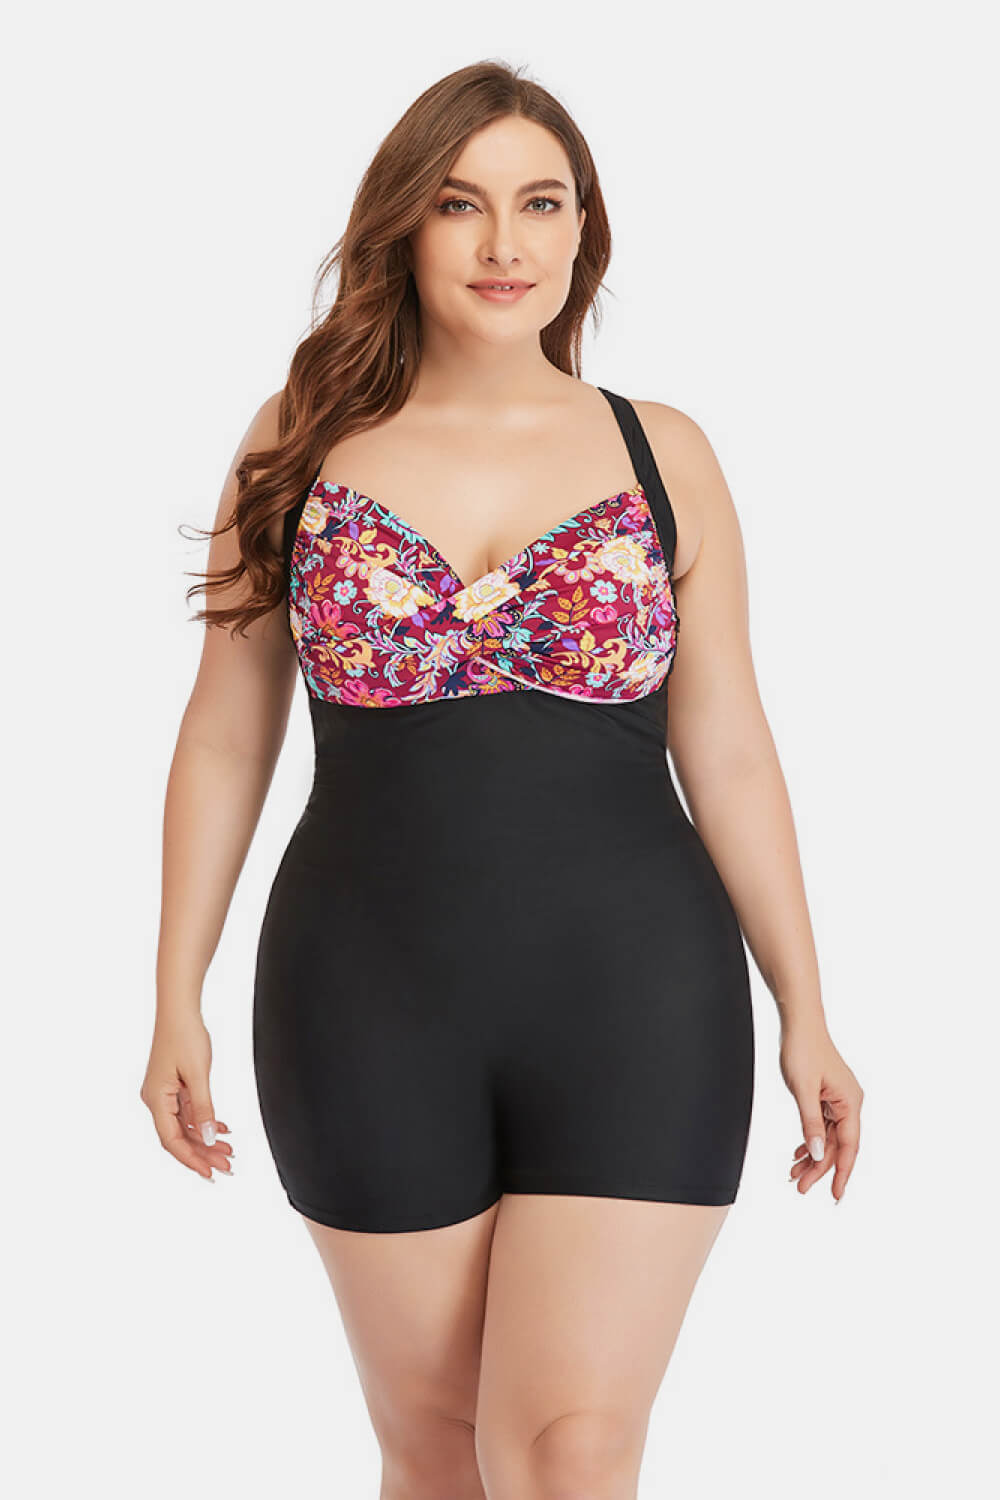 Plus Size Two-Tone One-Piece Swimsuit - Madikfashions.com